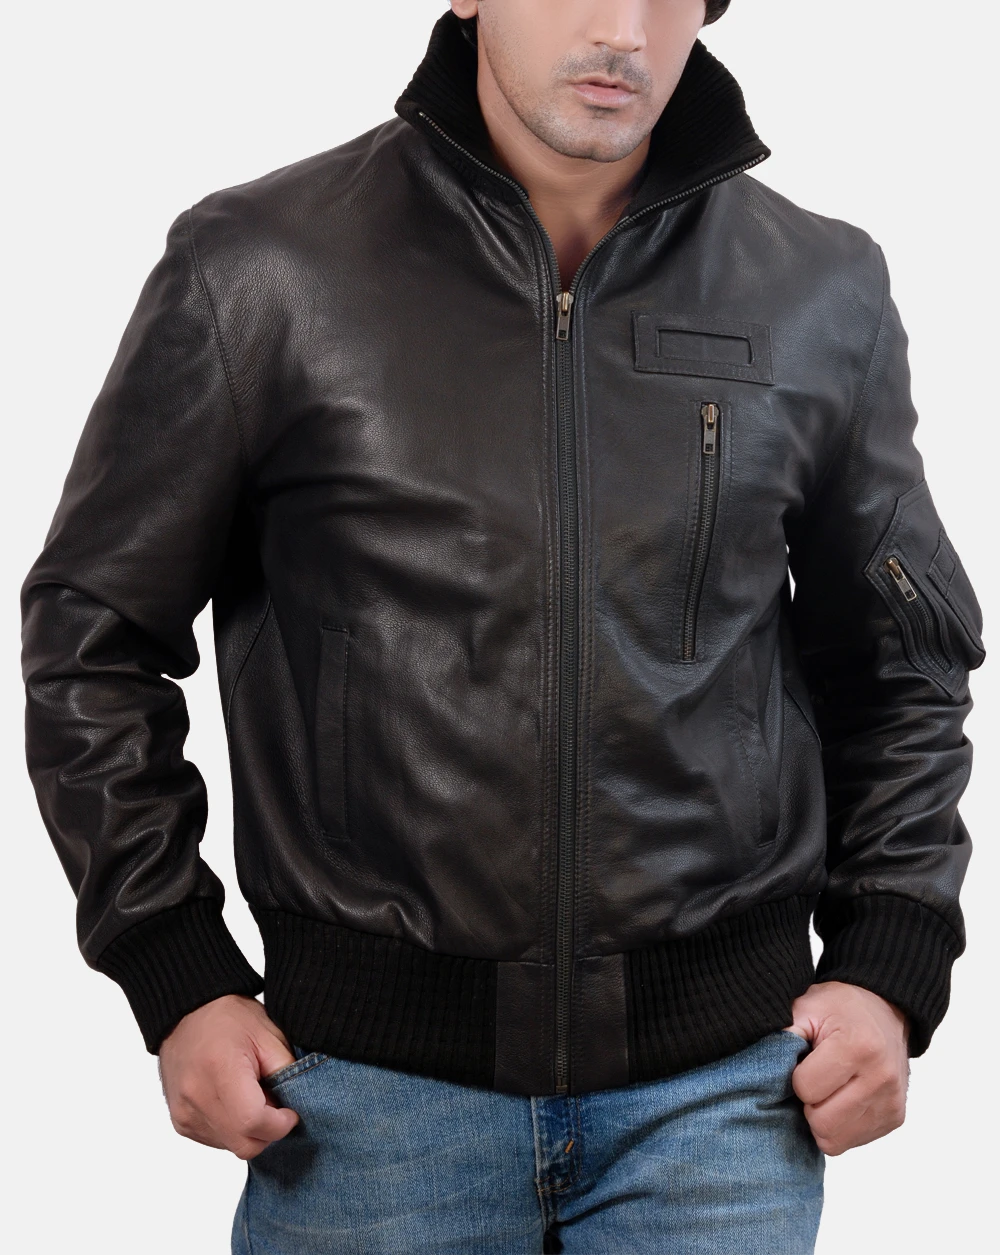 Rolph rolph leather bobmber jacket